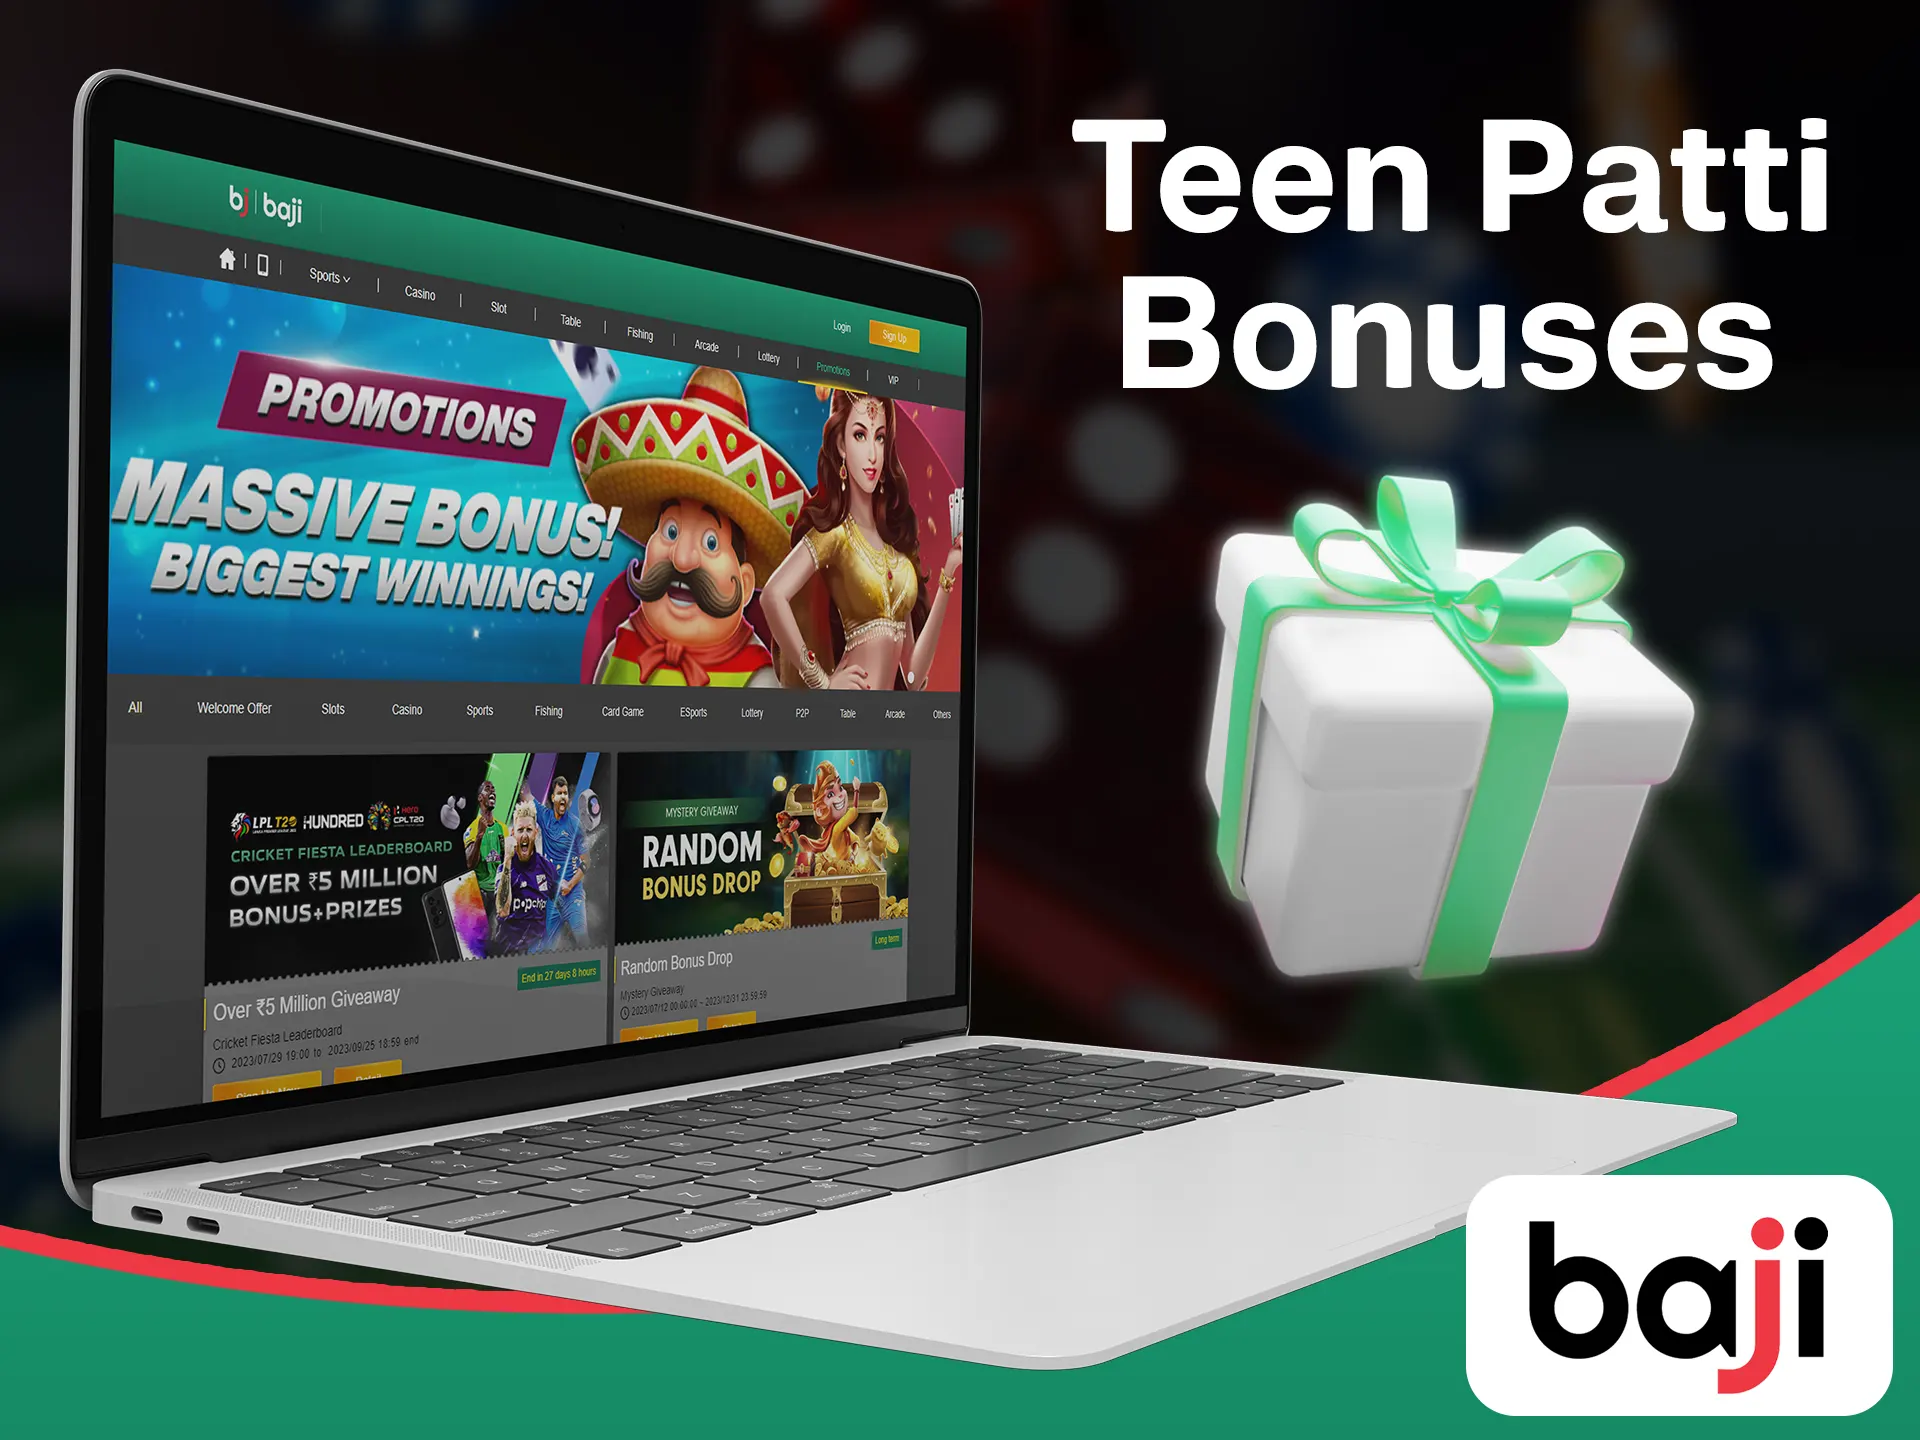 Claim teen patti bonuses at the Baji.